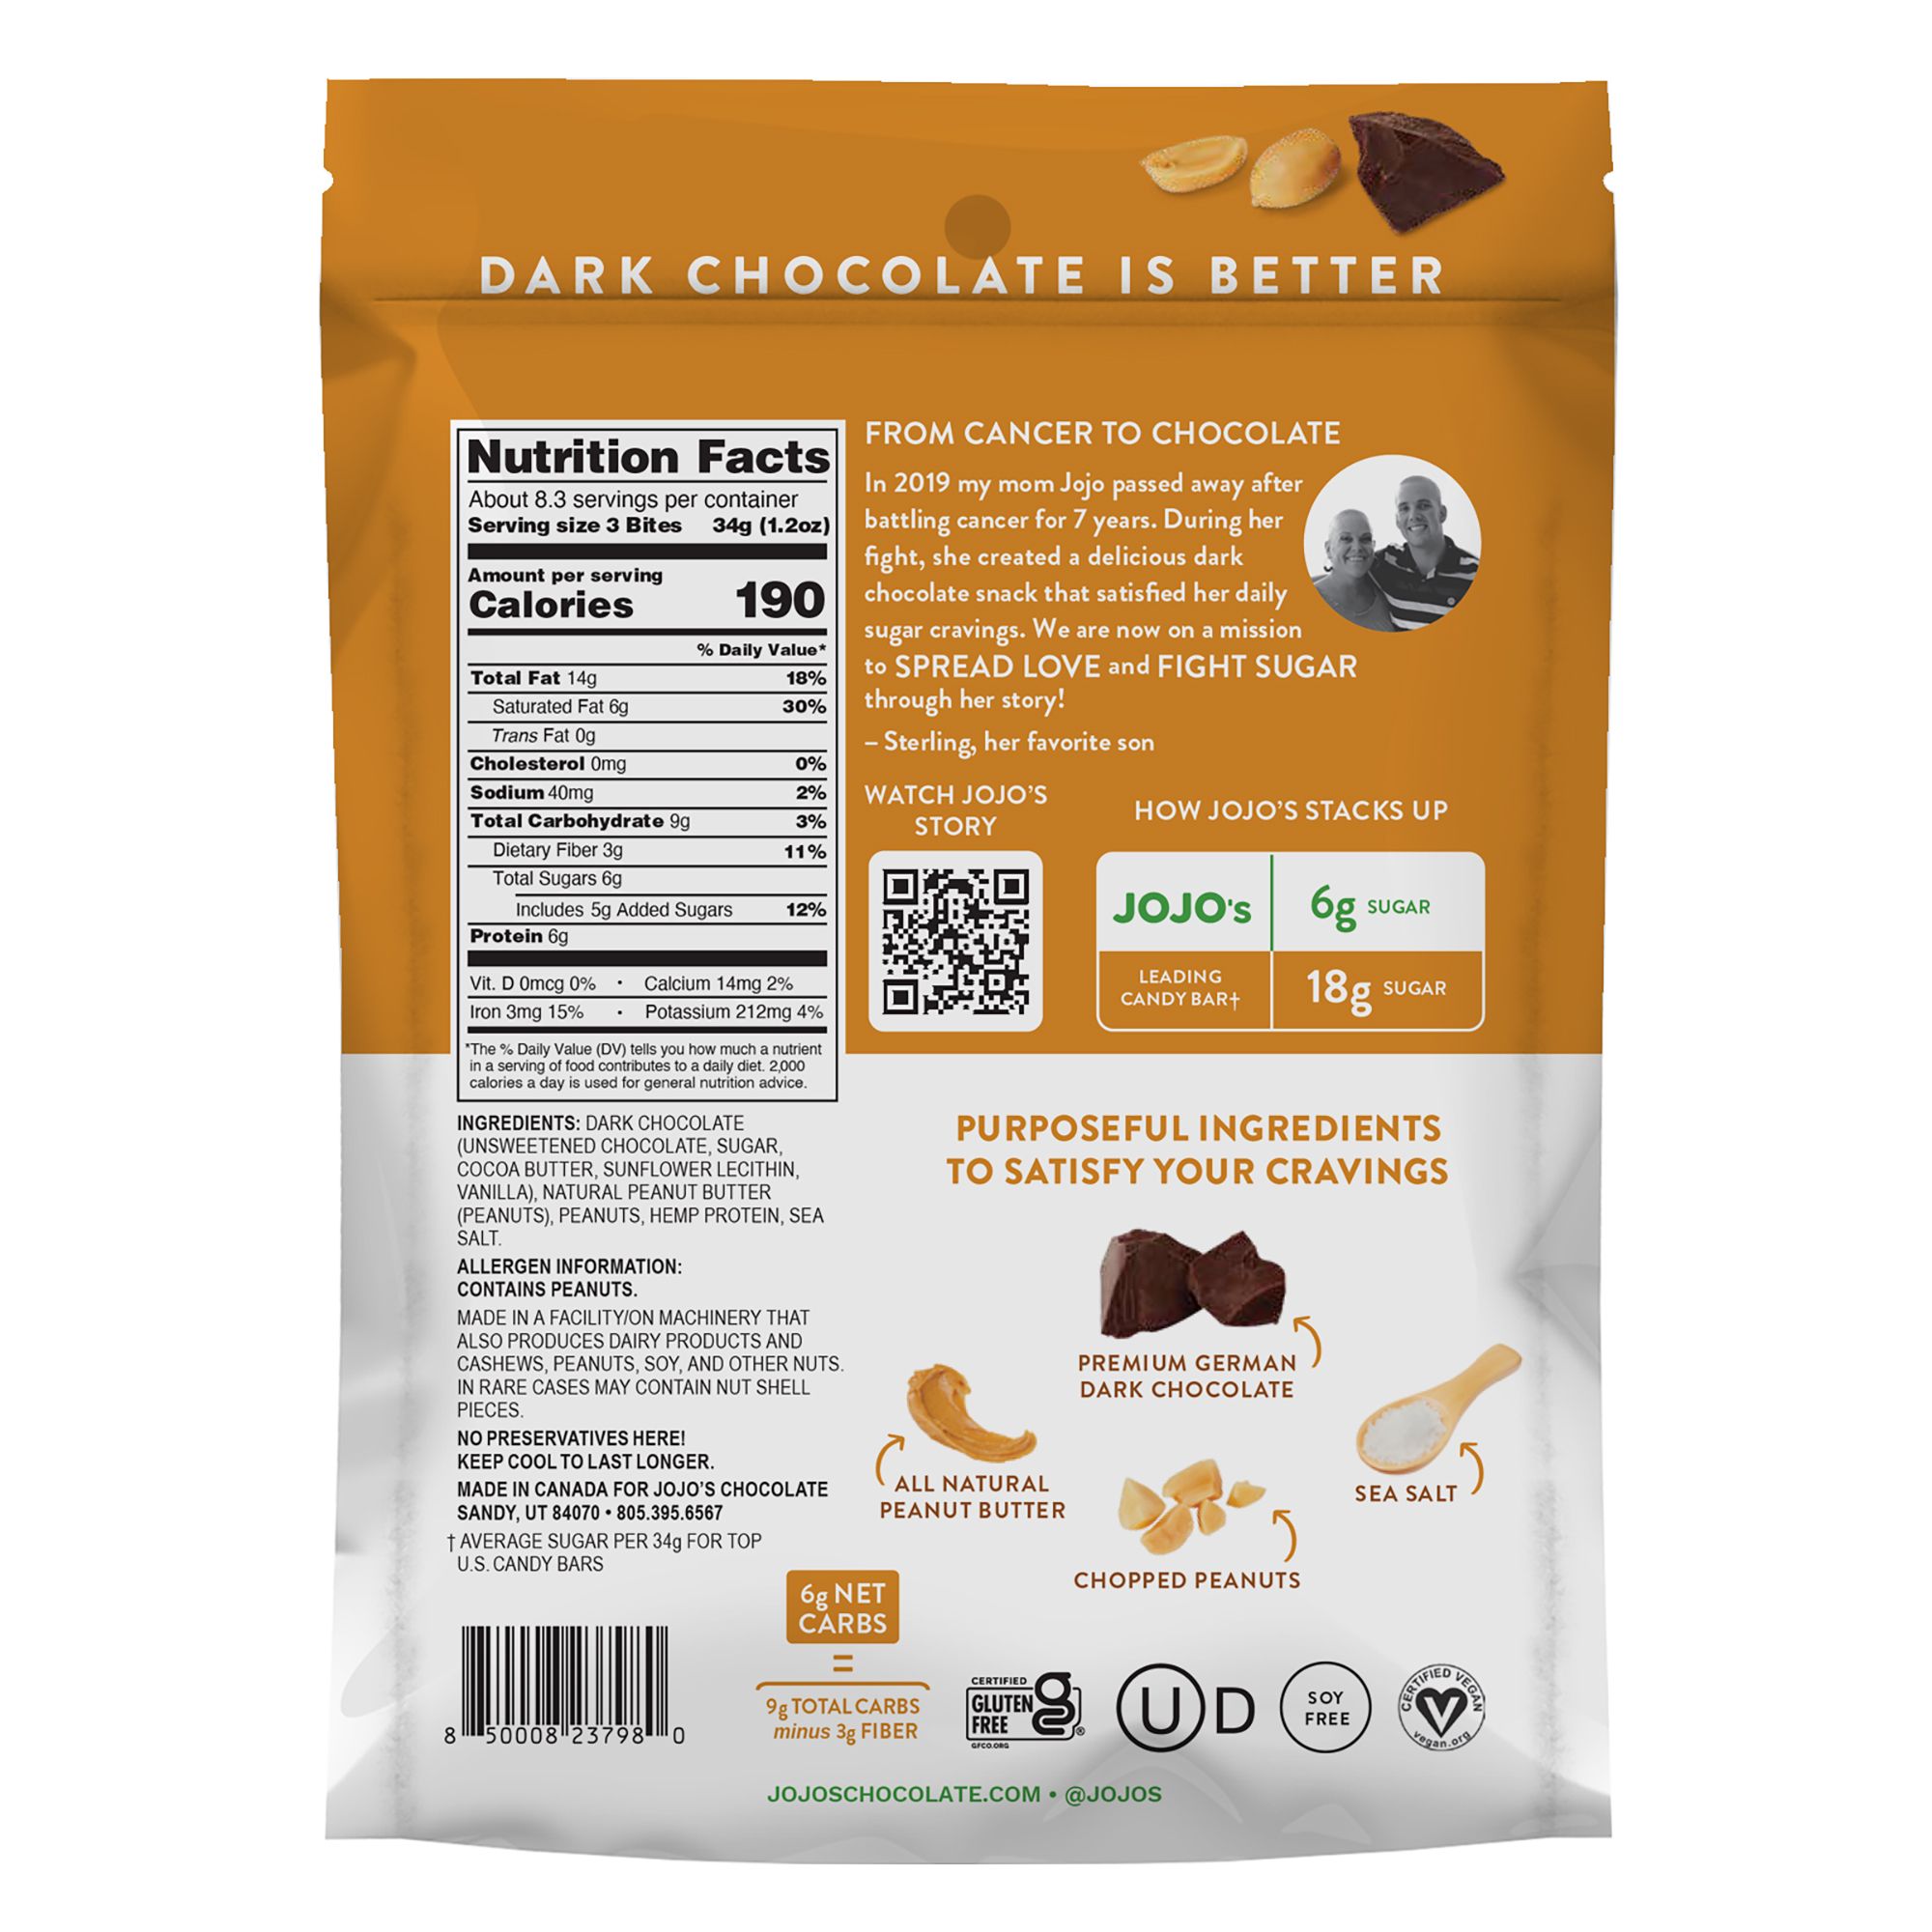 Dark Chocolate PEANUT BUTTER FILLED BITES + Plant-Based Protein – JOJO's  Chocolate